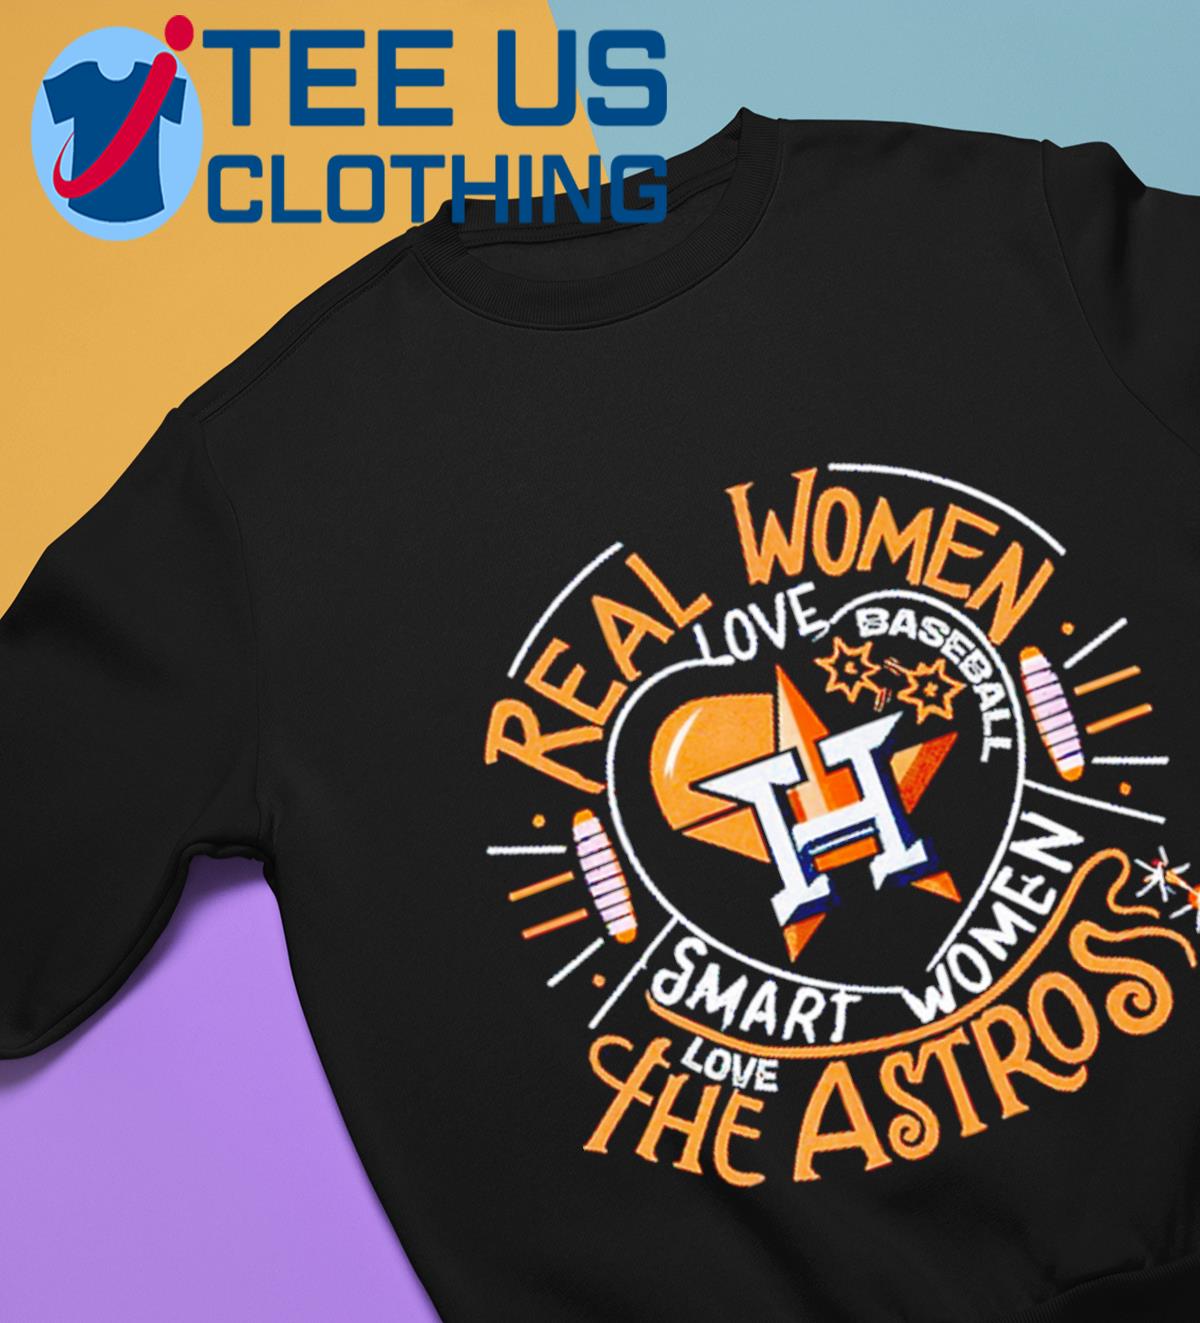 Real women love baseball smart women love the Houston Astros shirt, hoodie,  sweater, long sleeve and tank top